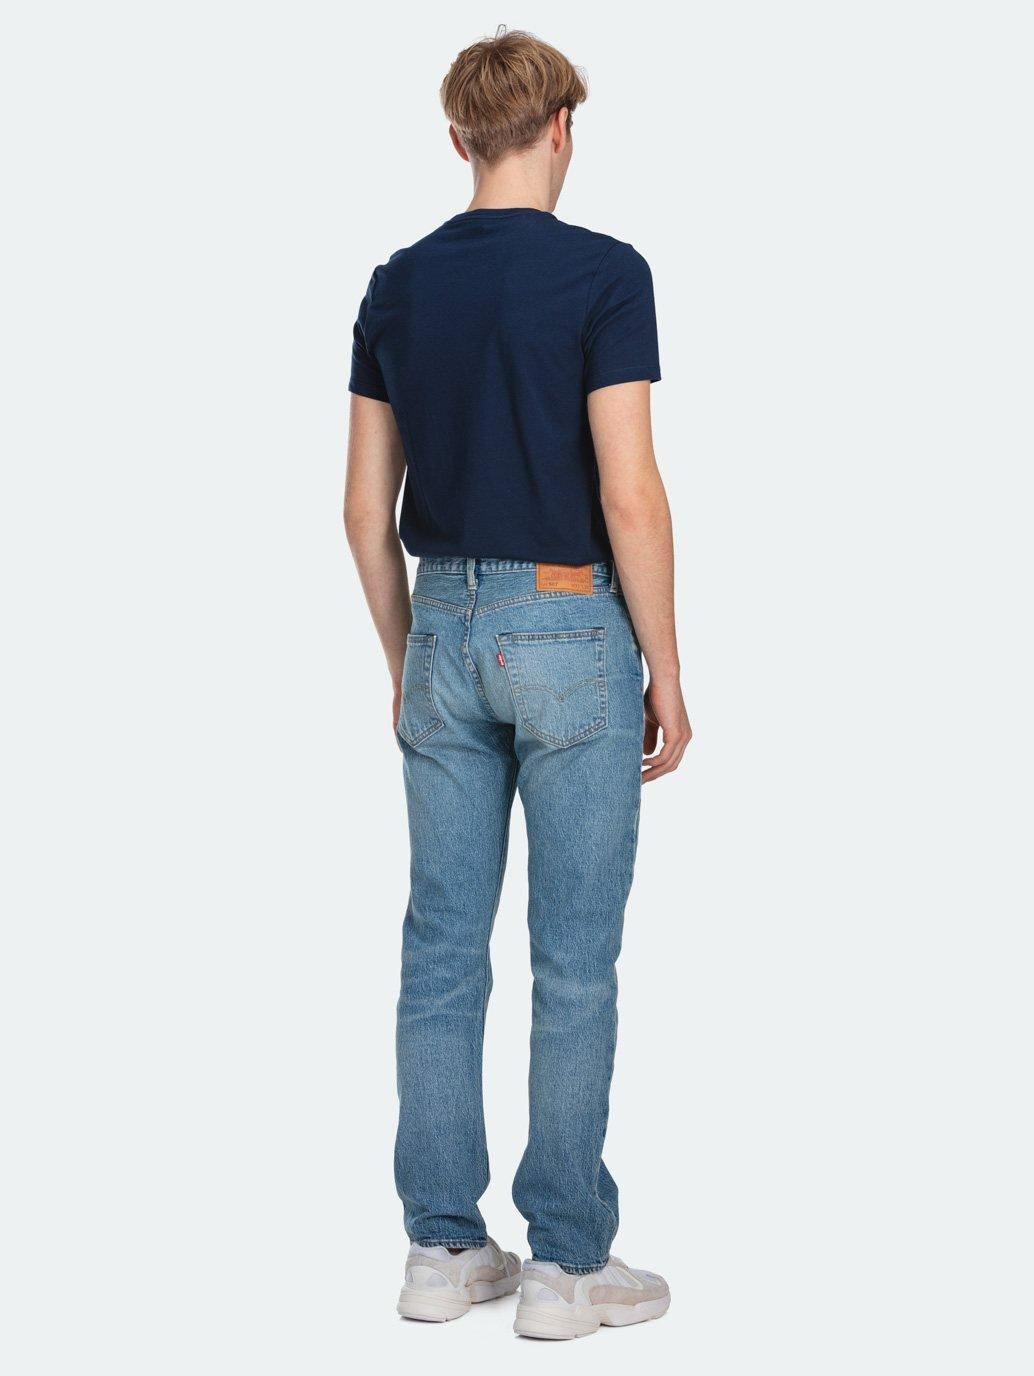 levis malaysia 501 original fit jeans for men basil crane back view